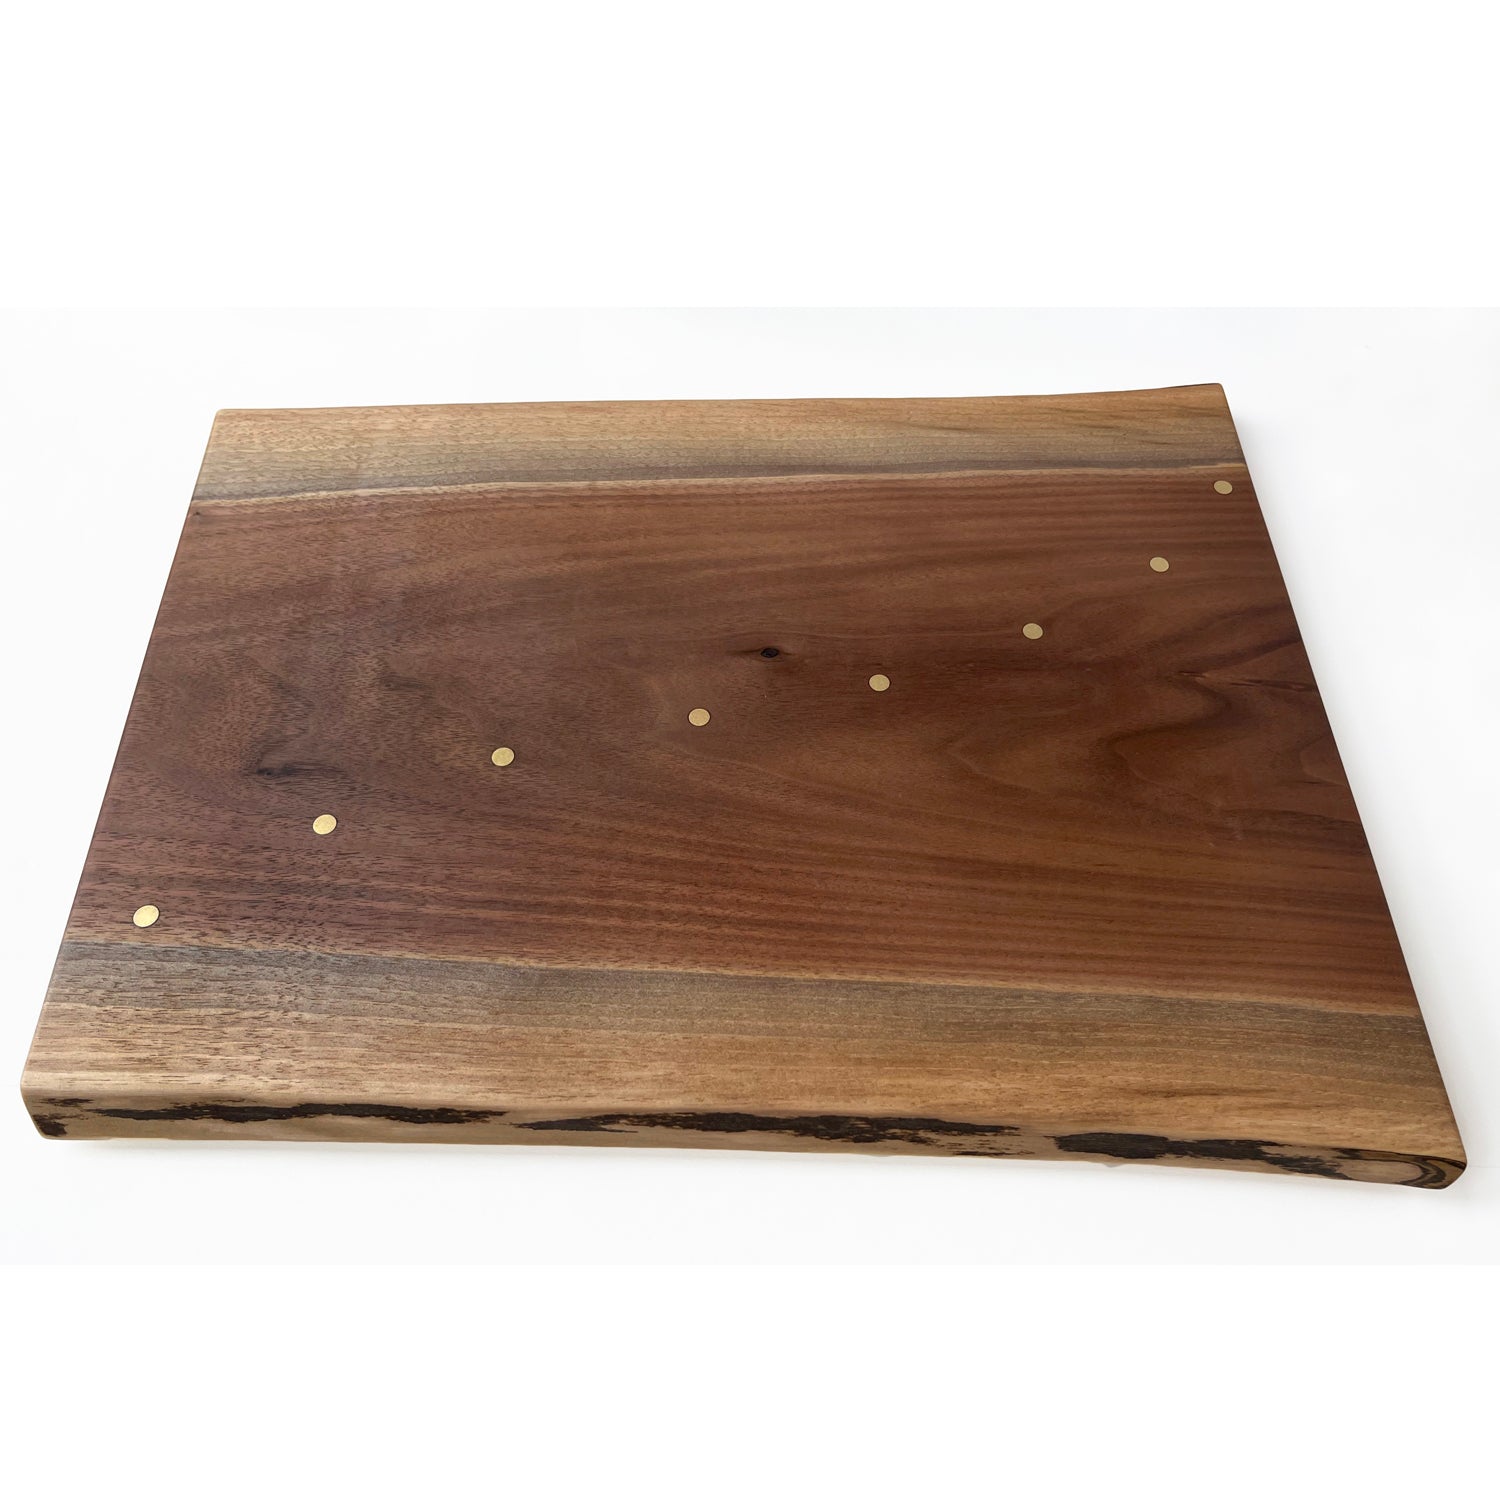 Debra Braun - Board with Brass, 18" x 13" x 1.5"